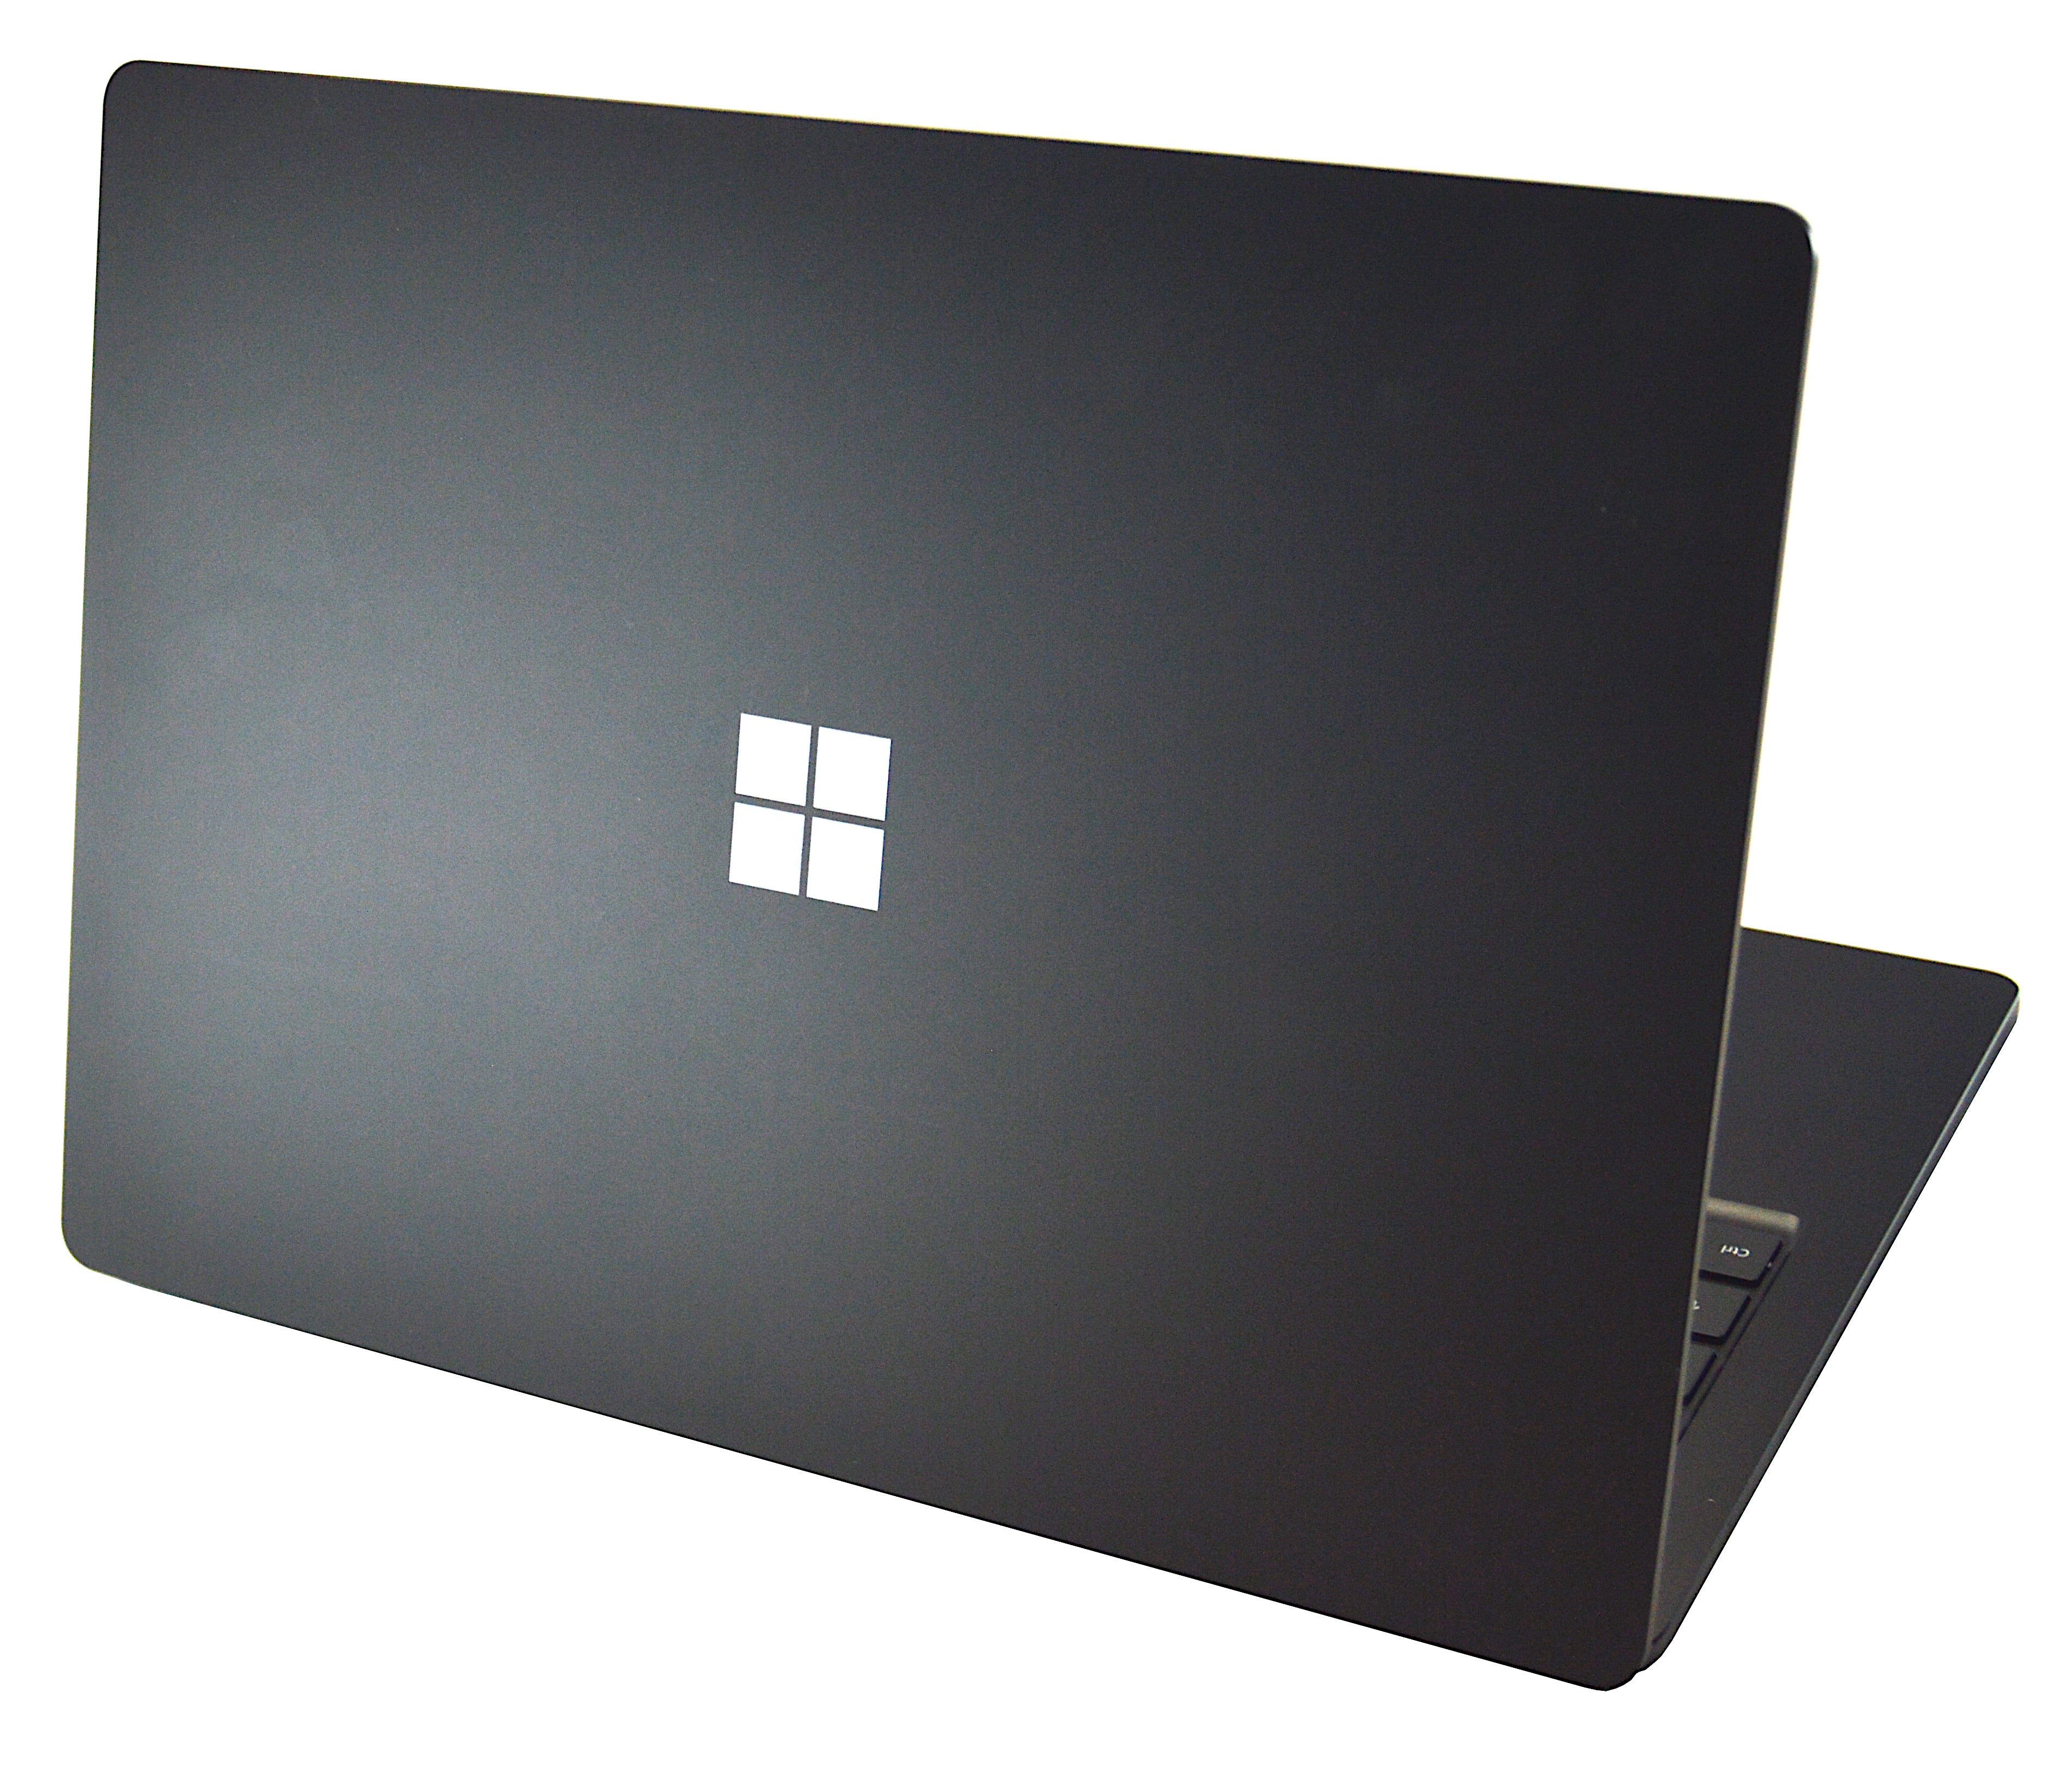 Microsoft Surface Laptop 3, 13" Intel Core i7, 16GB RAM, 256GB SSD